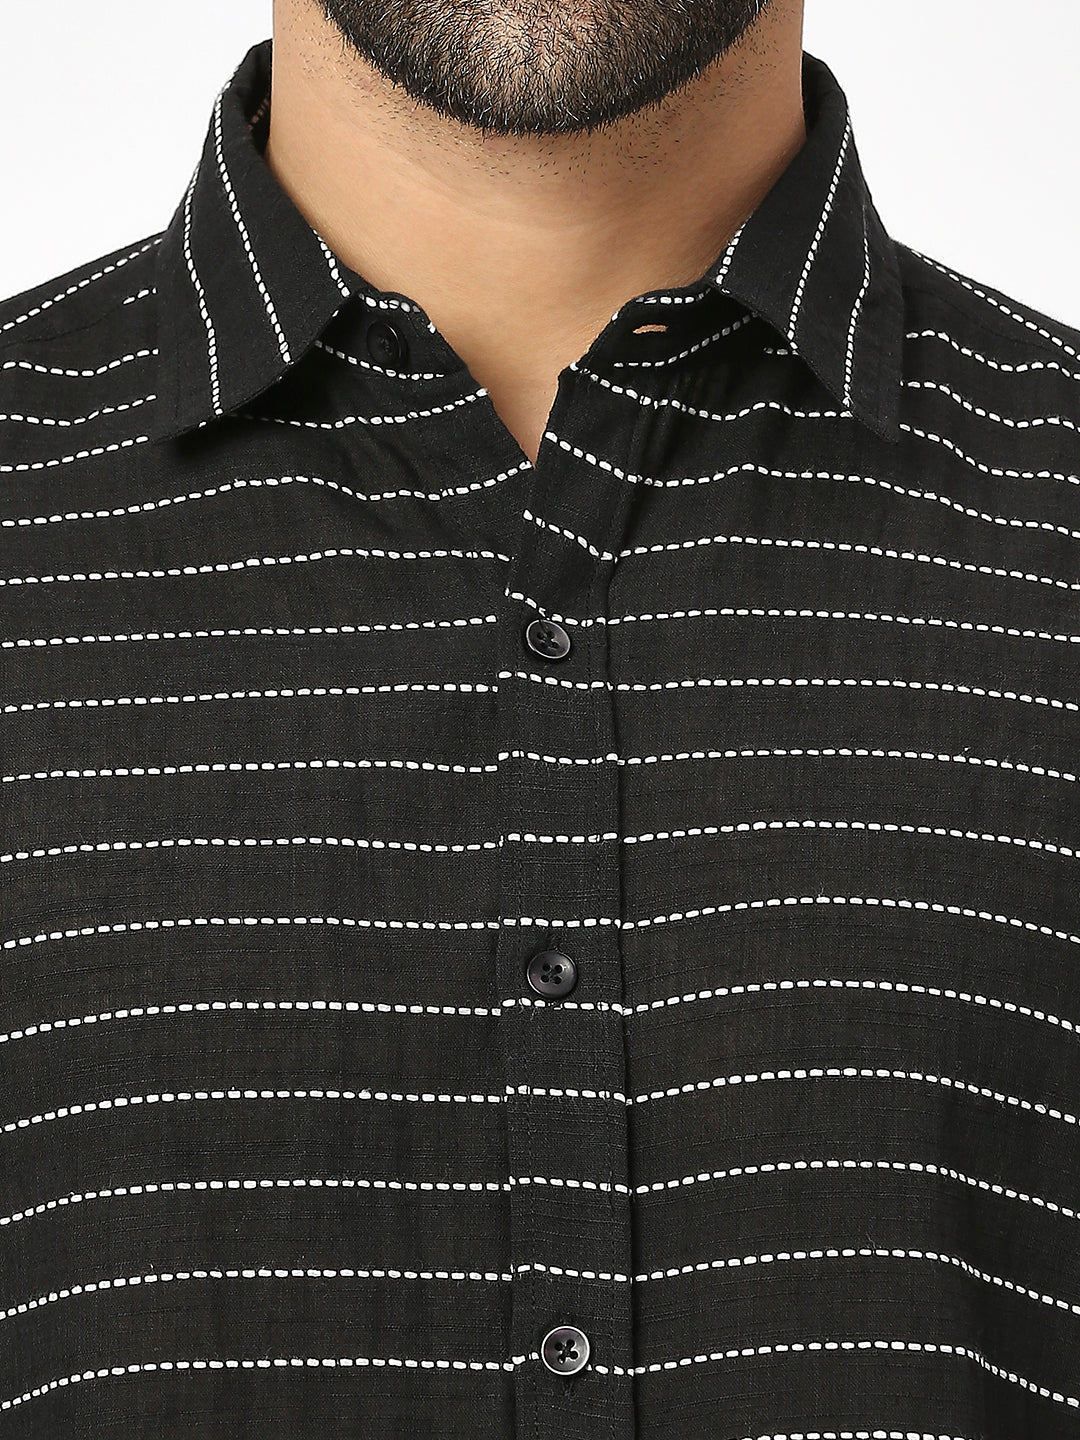 Embroidered Half Sleeves Regular fit Spread Collar Shirt